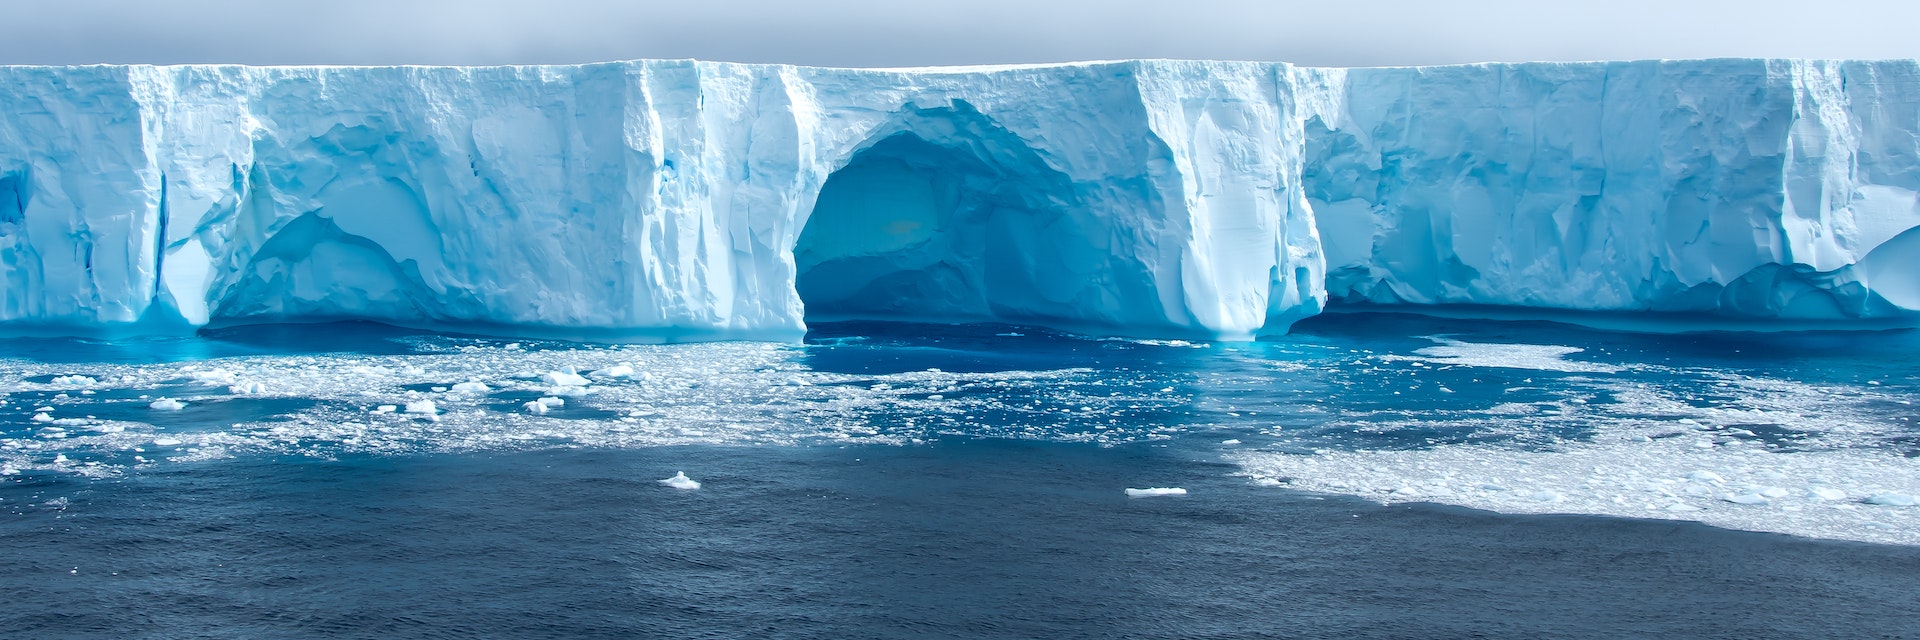 Beautiful blue iceberg and ice floe in Admiralty bay, King George Island Antarctica.